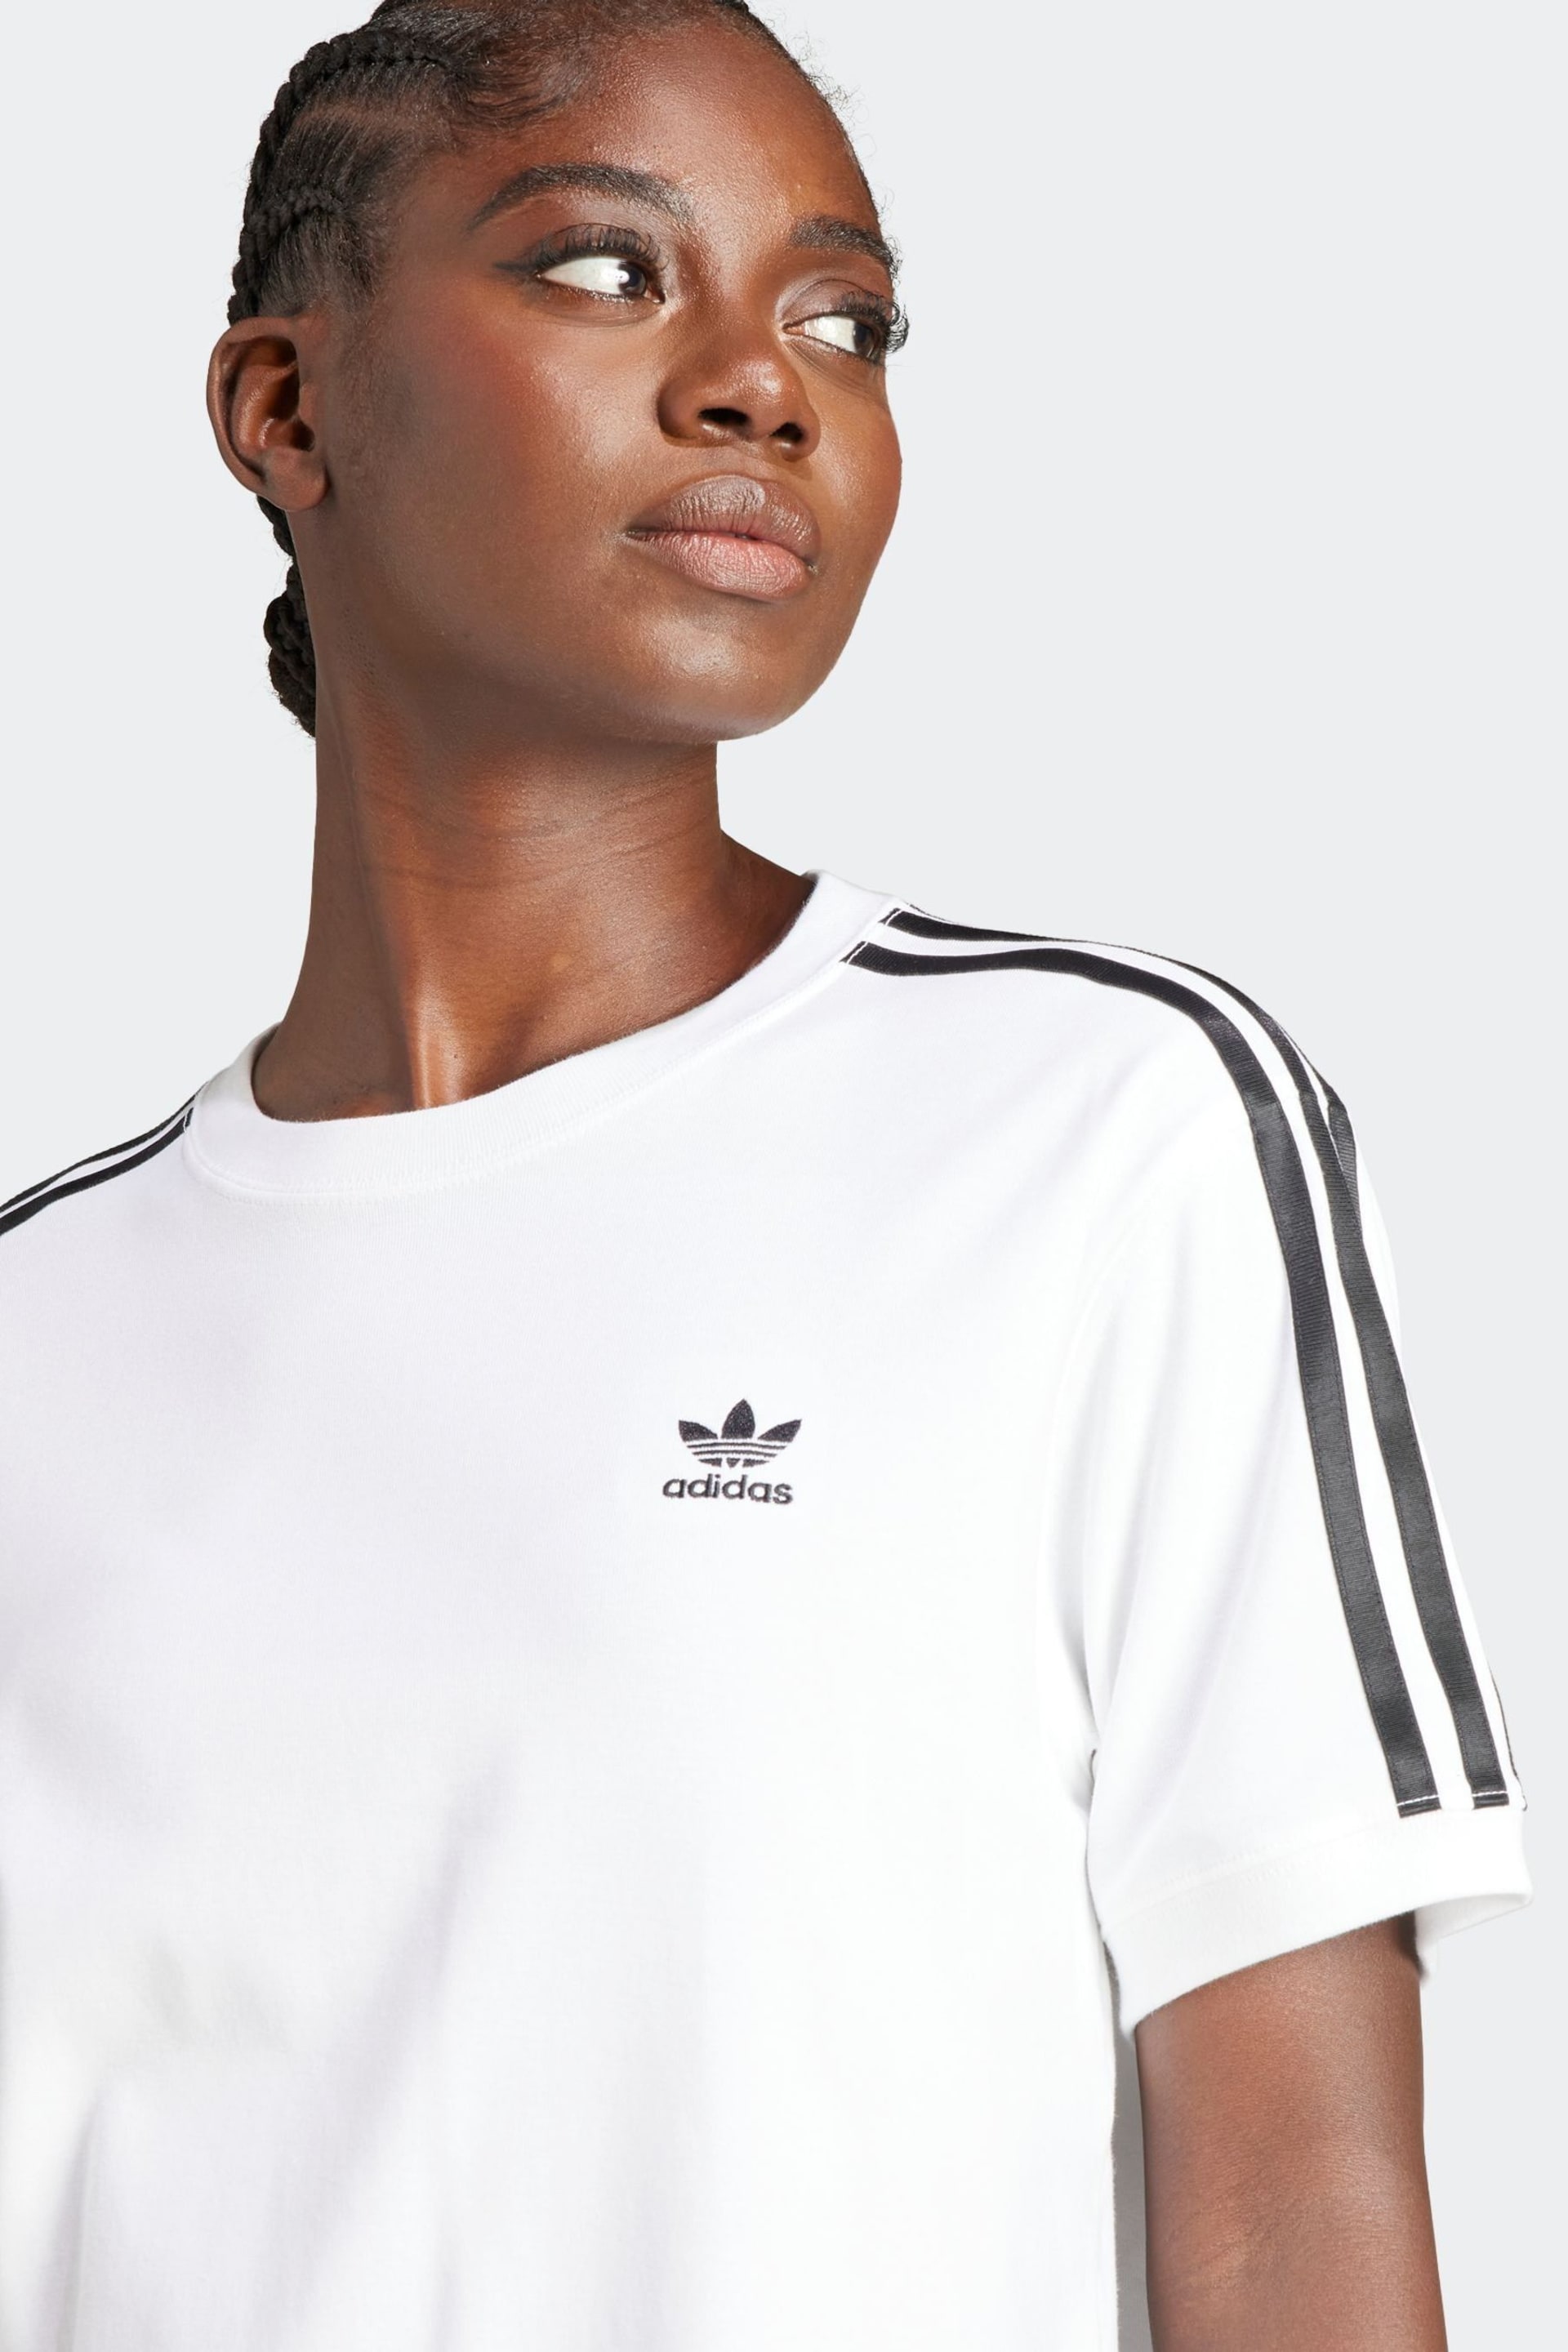 adidas White 3 Stripe T-Shirt - Image 7 of 8